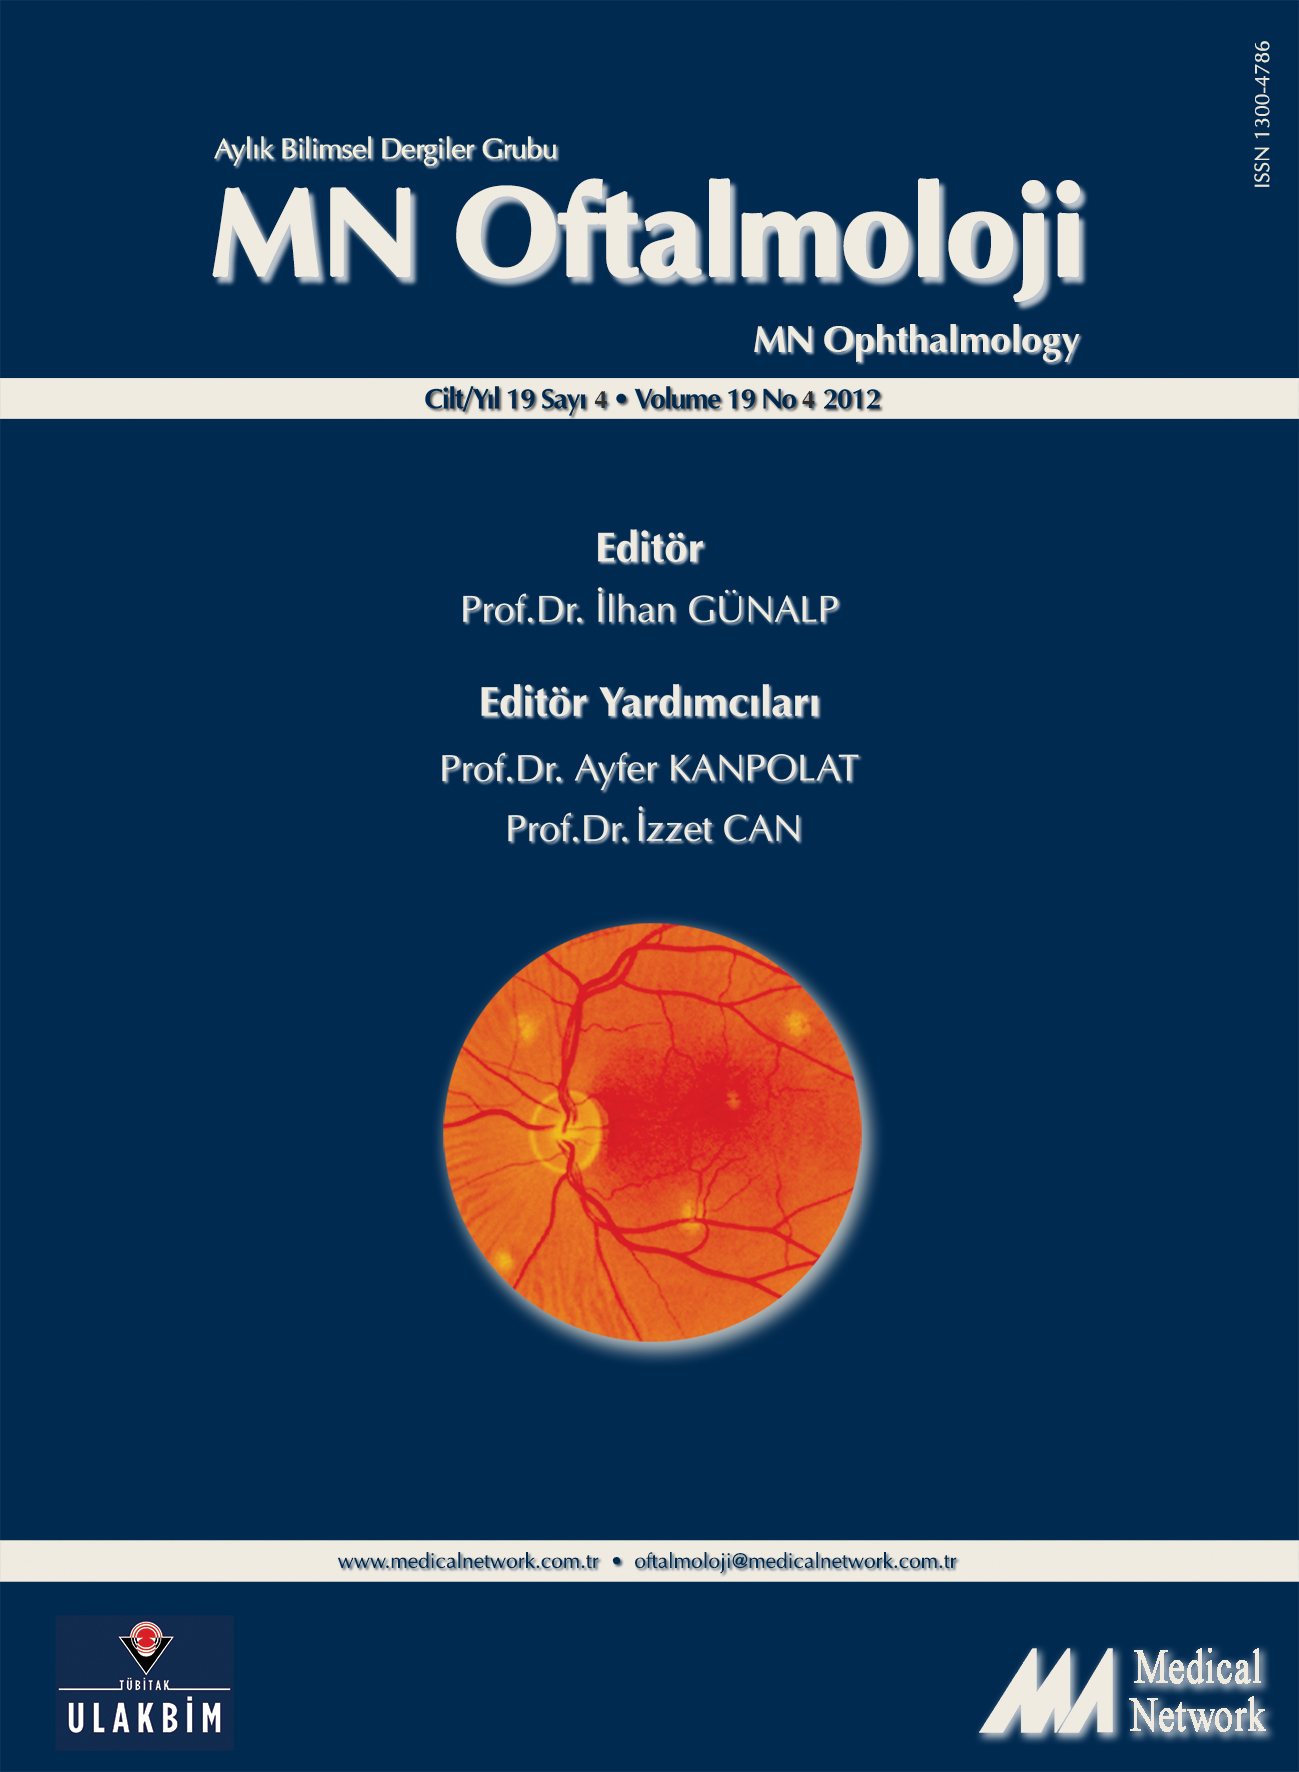 <p>MN Oftalmoloji Cilt: 19 Say: 4 2012 (MN Ophthalmology Volume: 19 No 4 2012)</p>